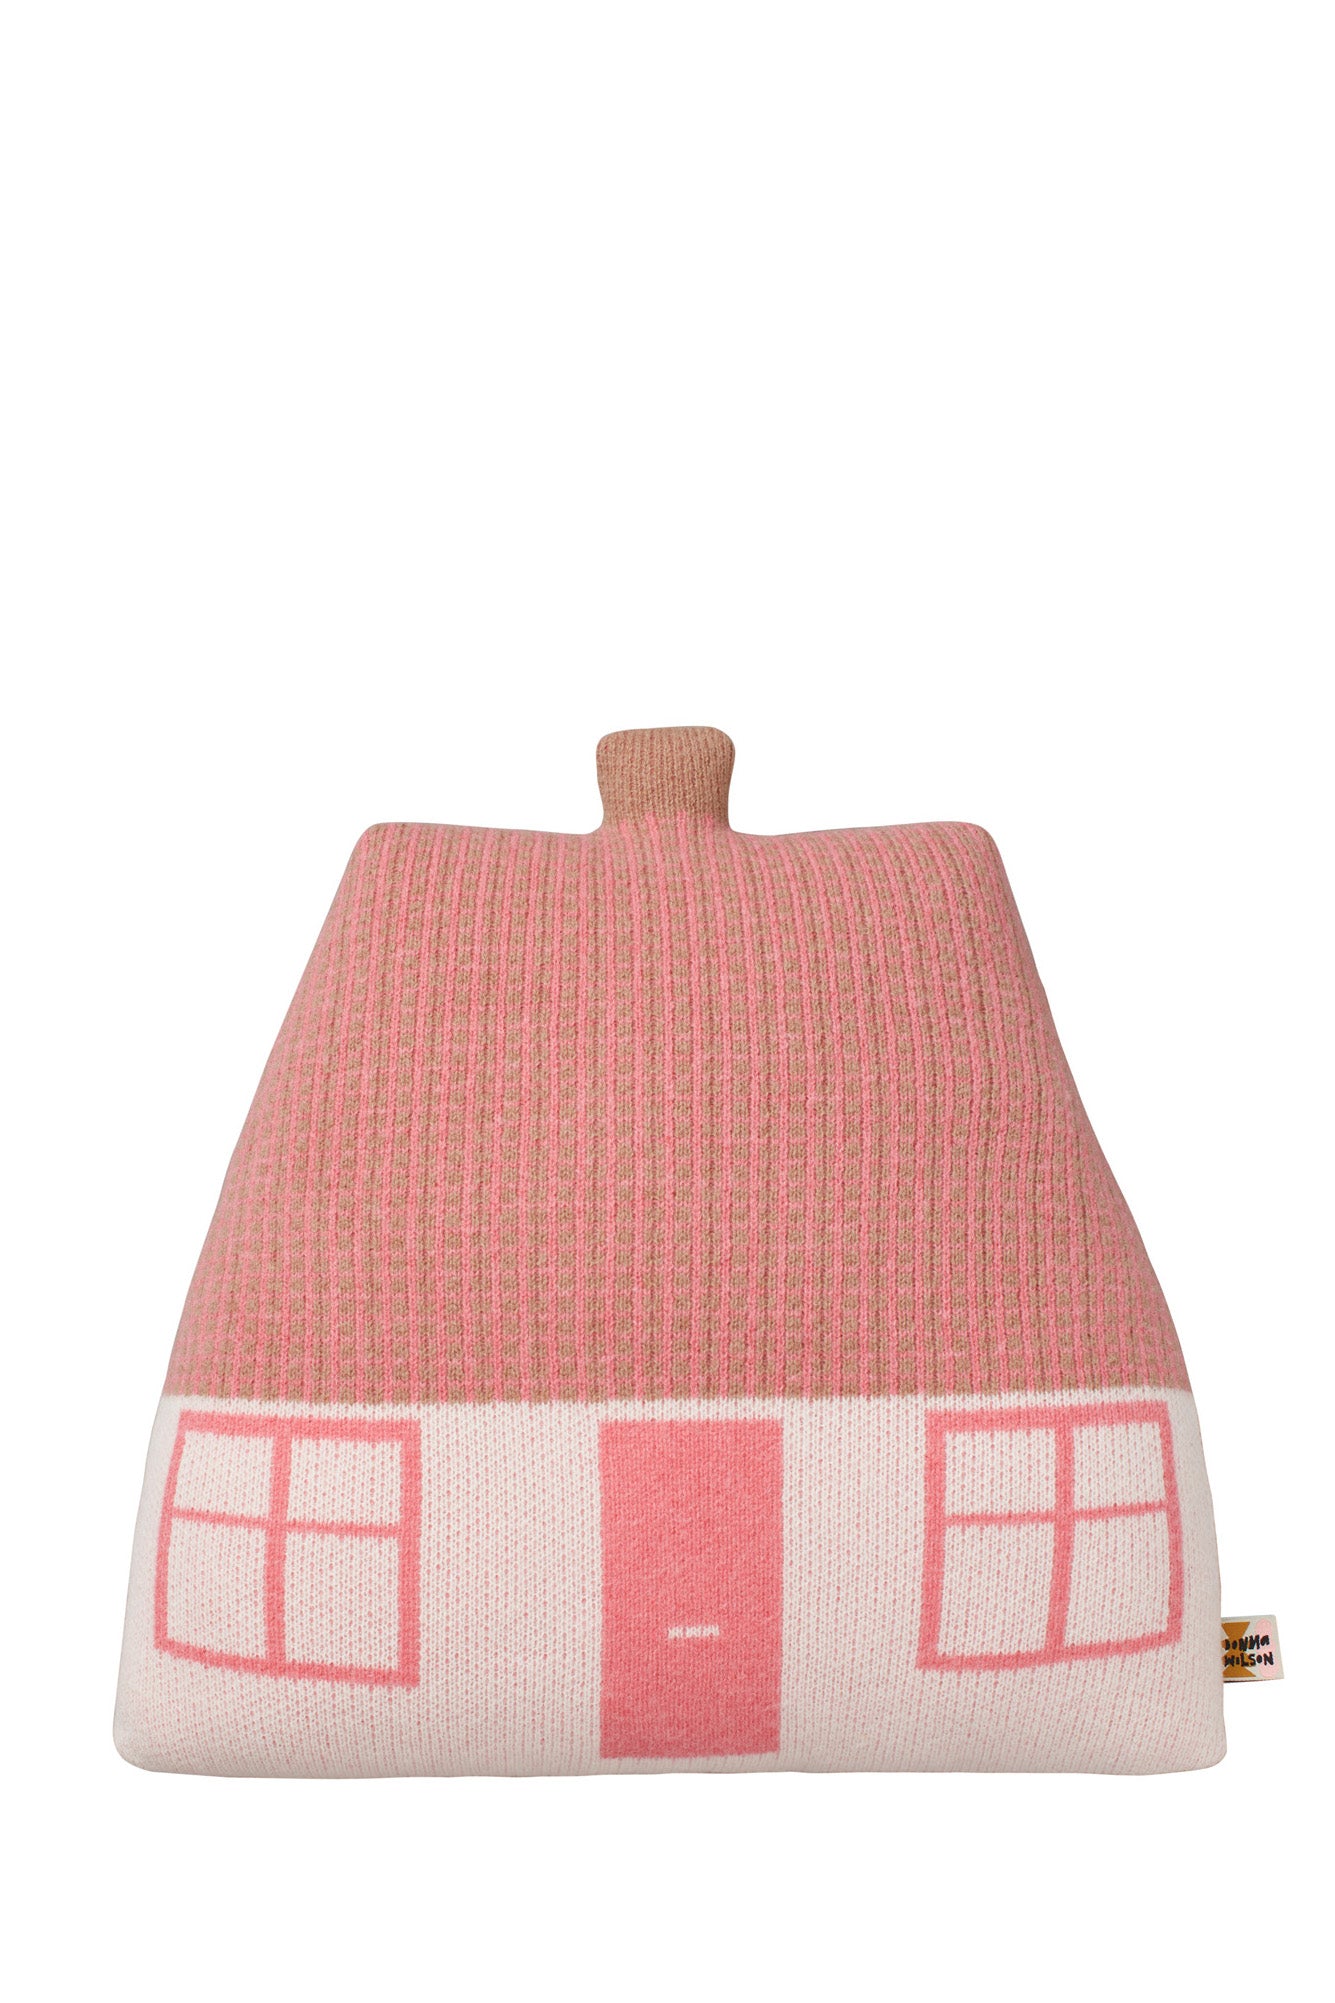 Cottage Cushion, pink